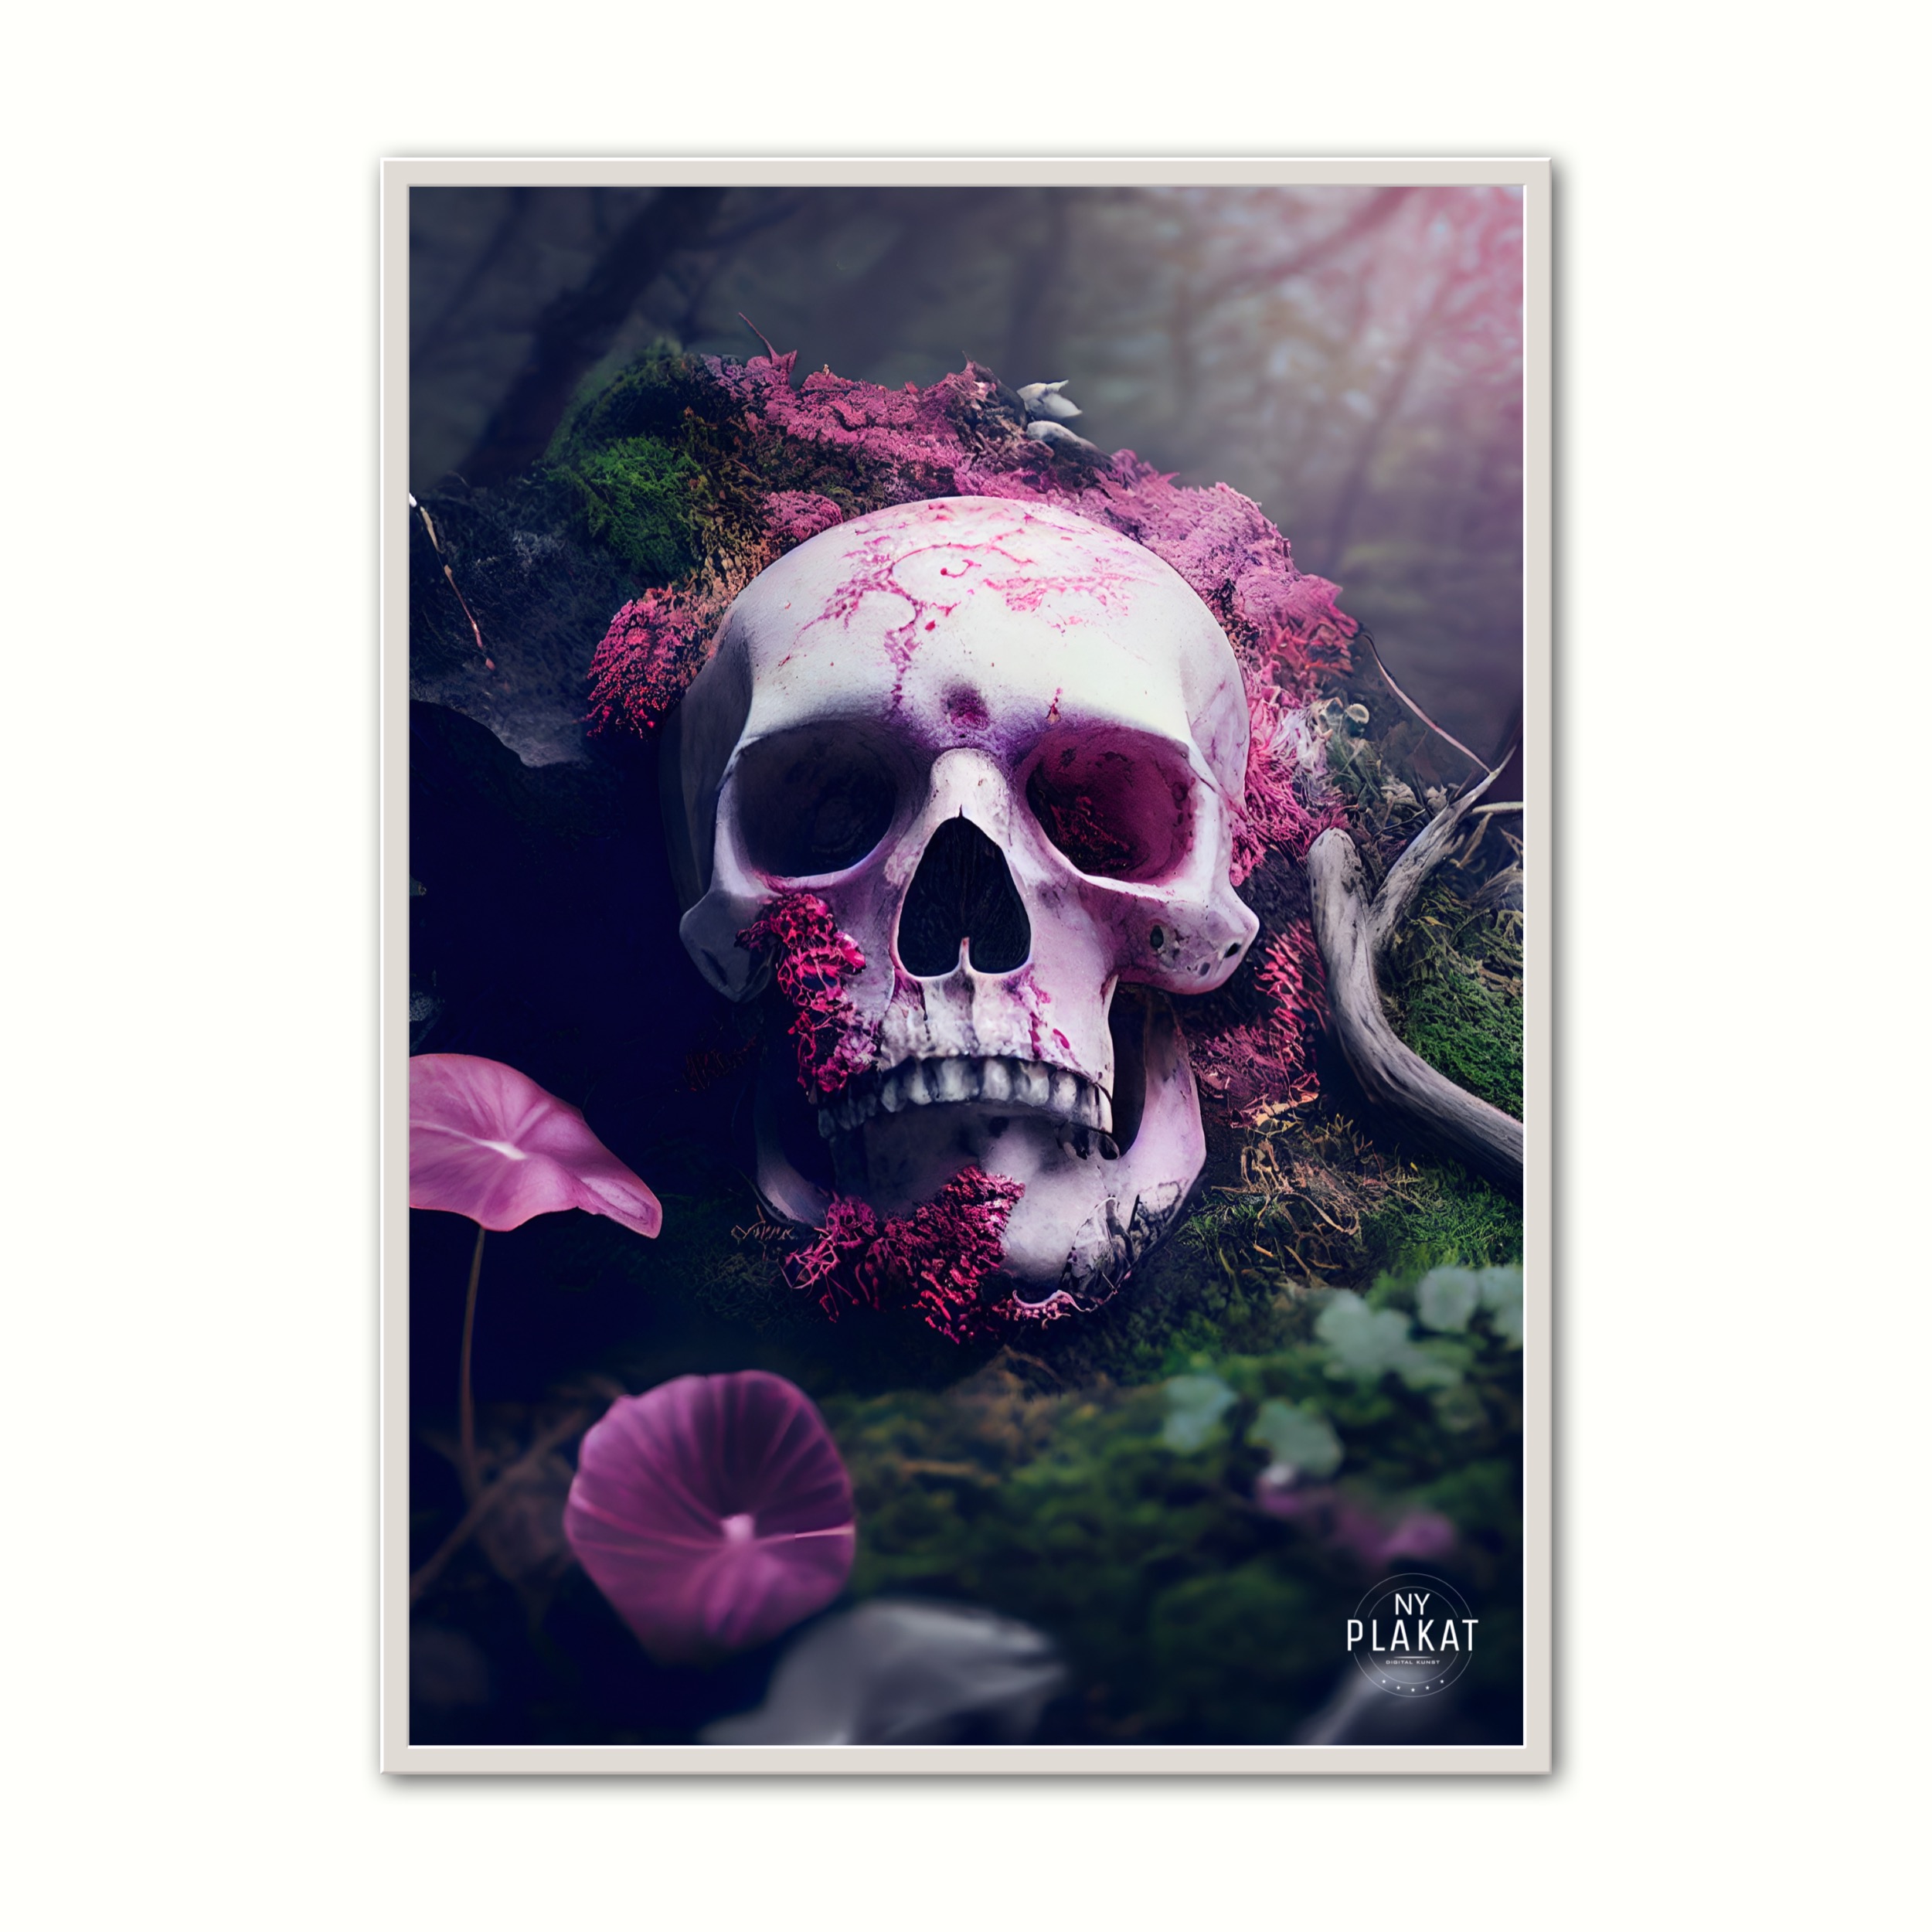 Se Plakat med Skull In Forest Poster No. 1 21 x 29,7 cm (A4) hos Nyplakat.dk